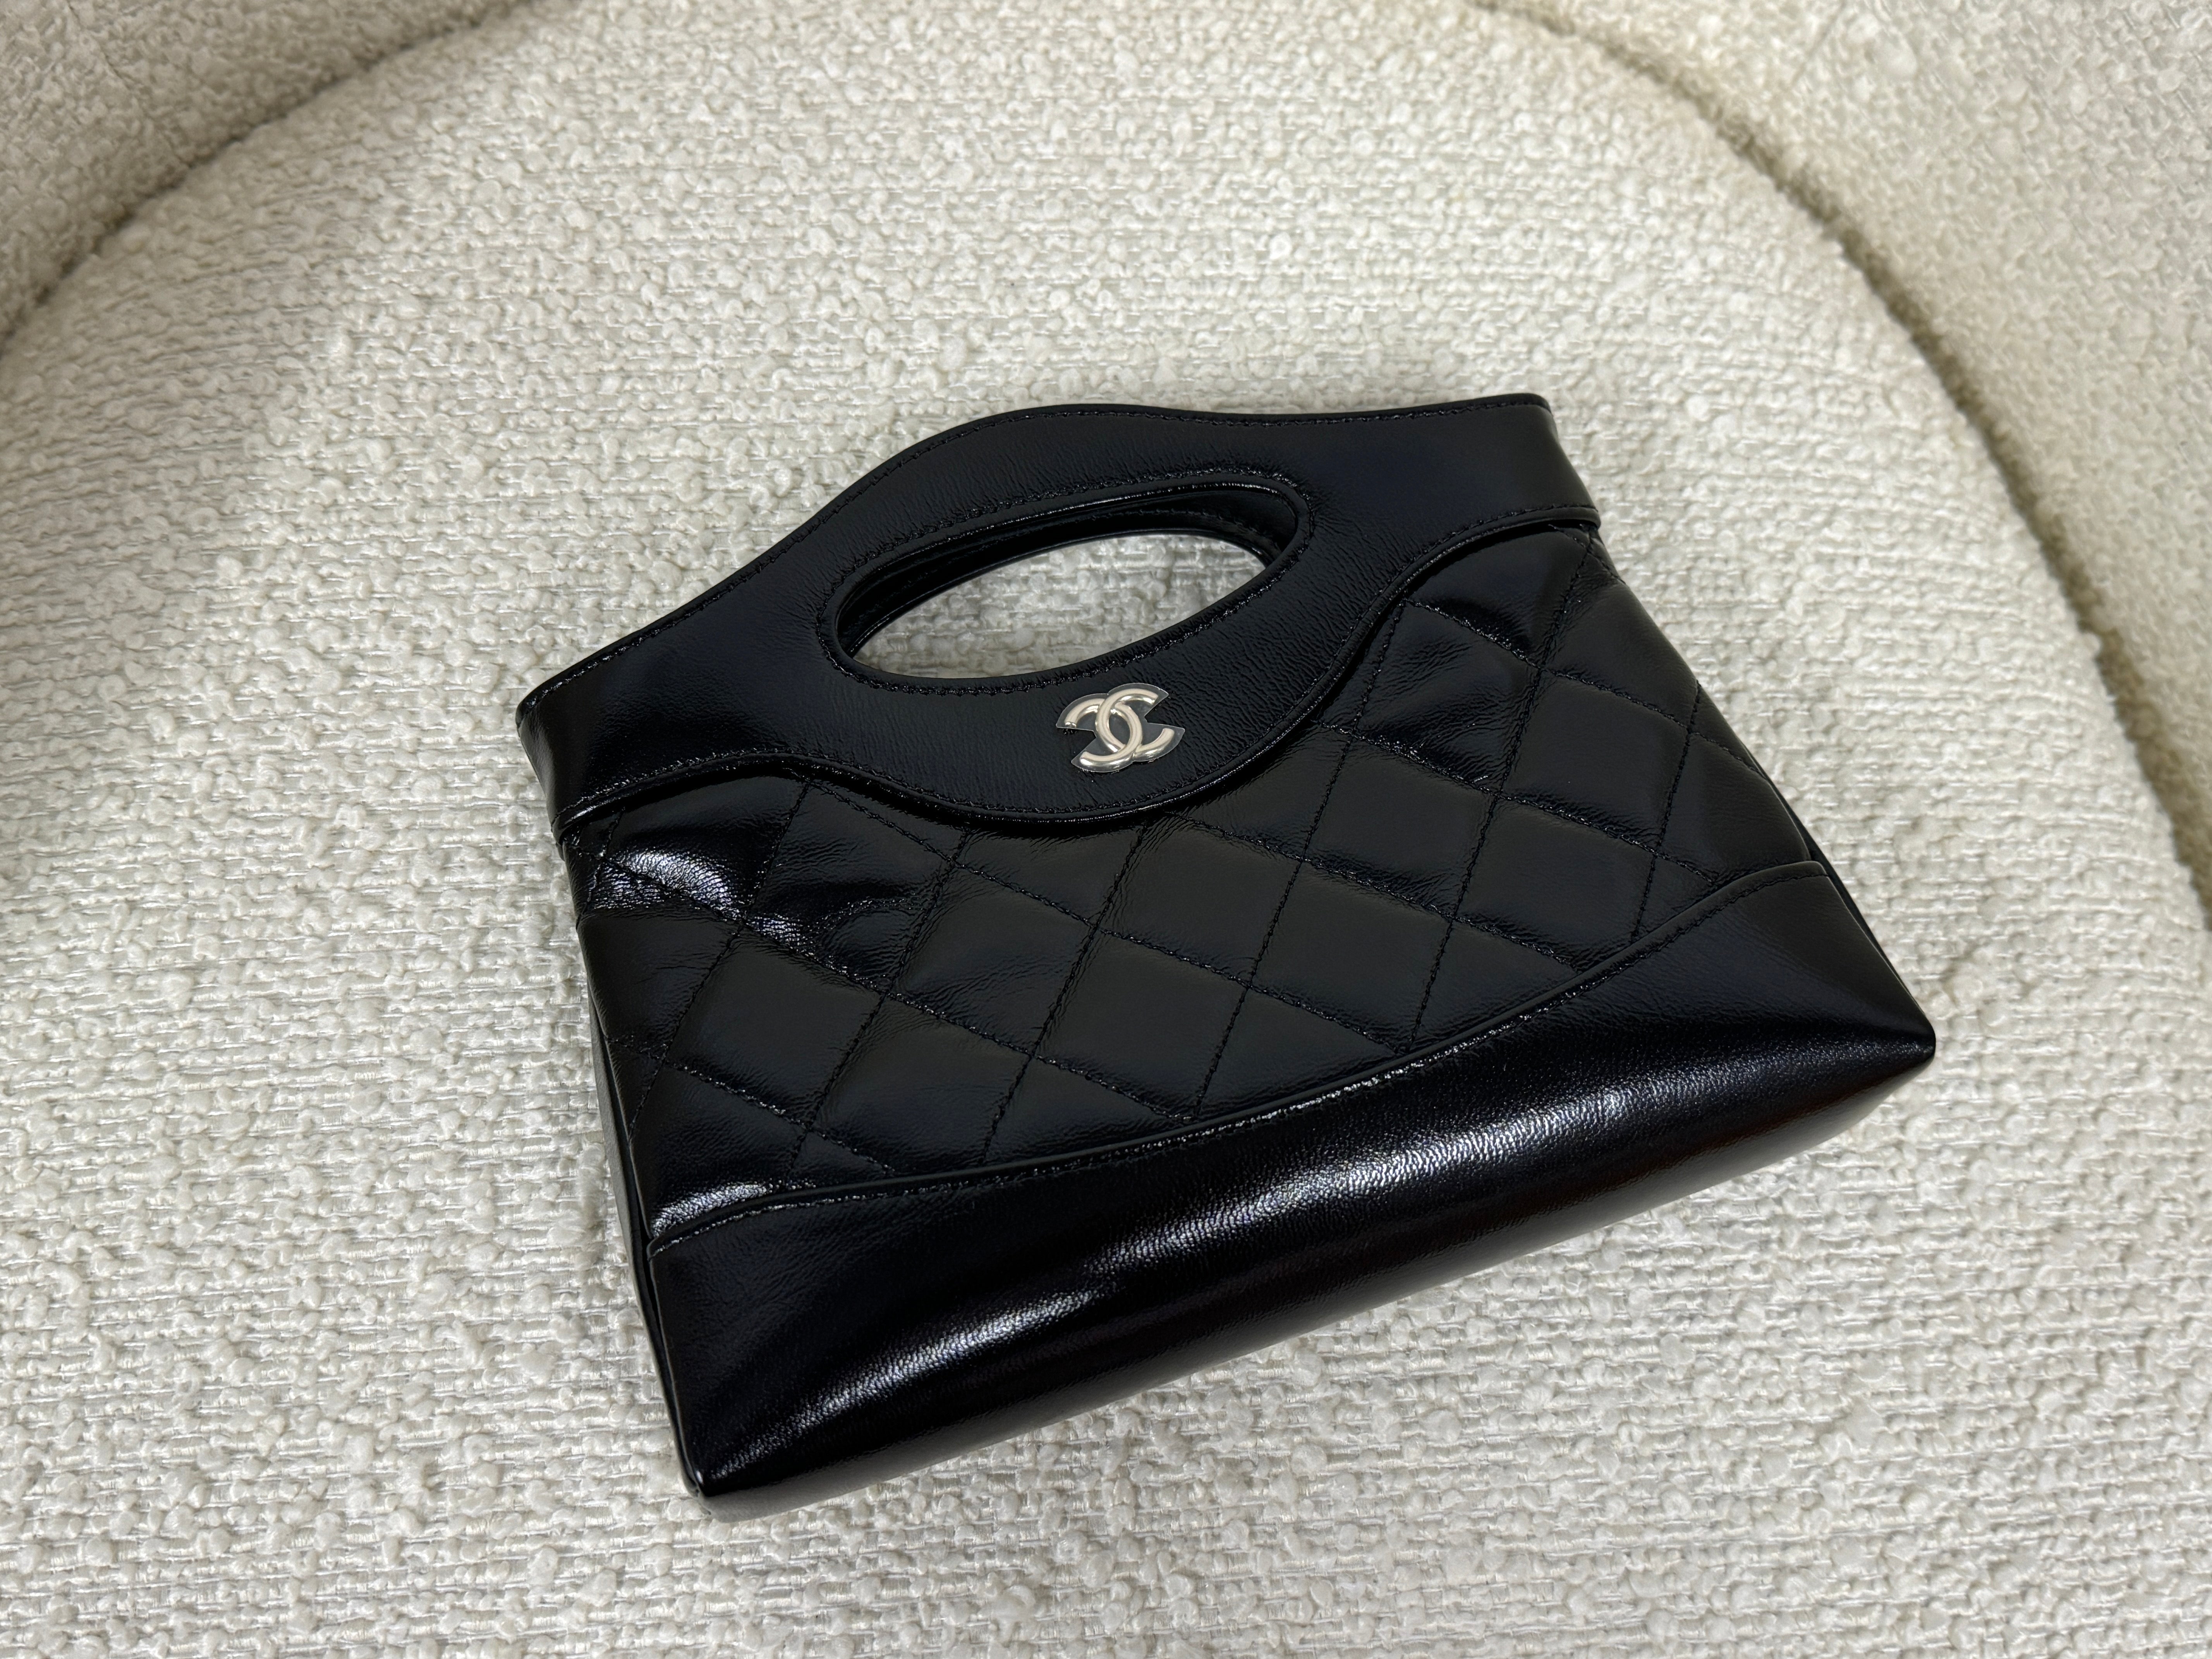 *HOT* Chanel Phone Holders with Chain 31 Nano Bag